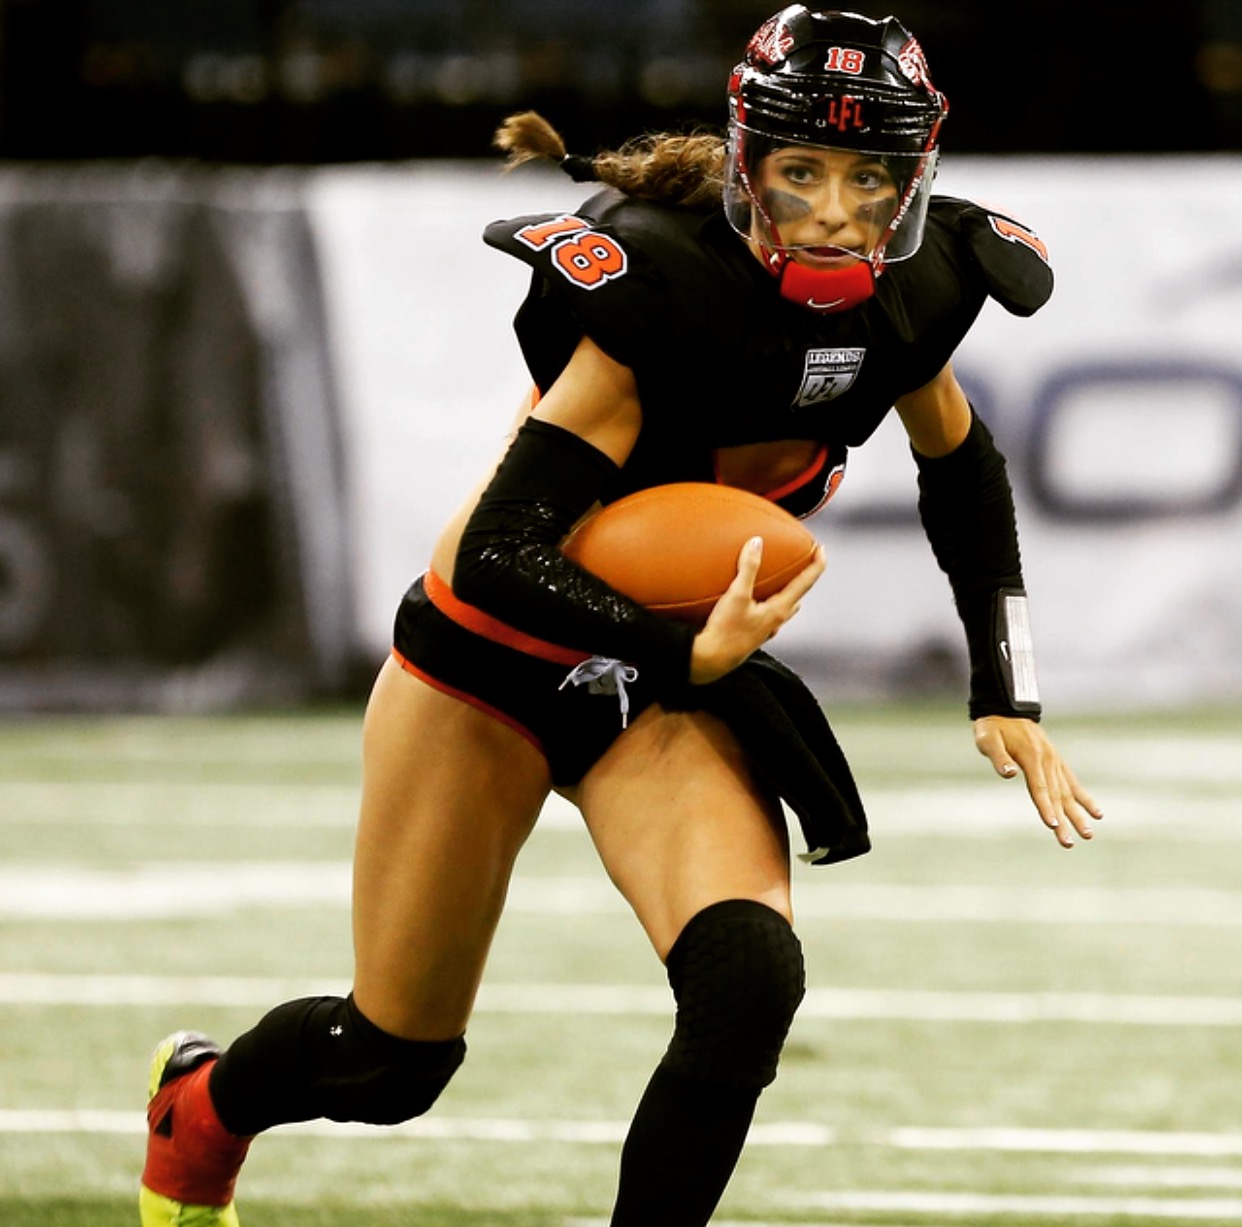 A Woman Dominating a “Man’s Game”: Dakota Hughes’ football career